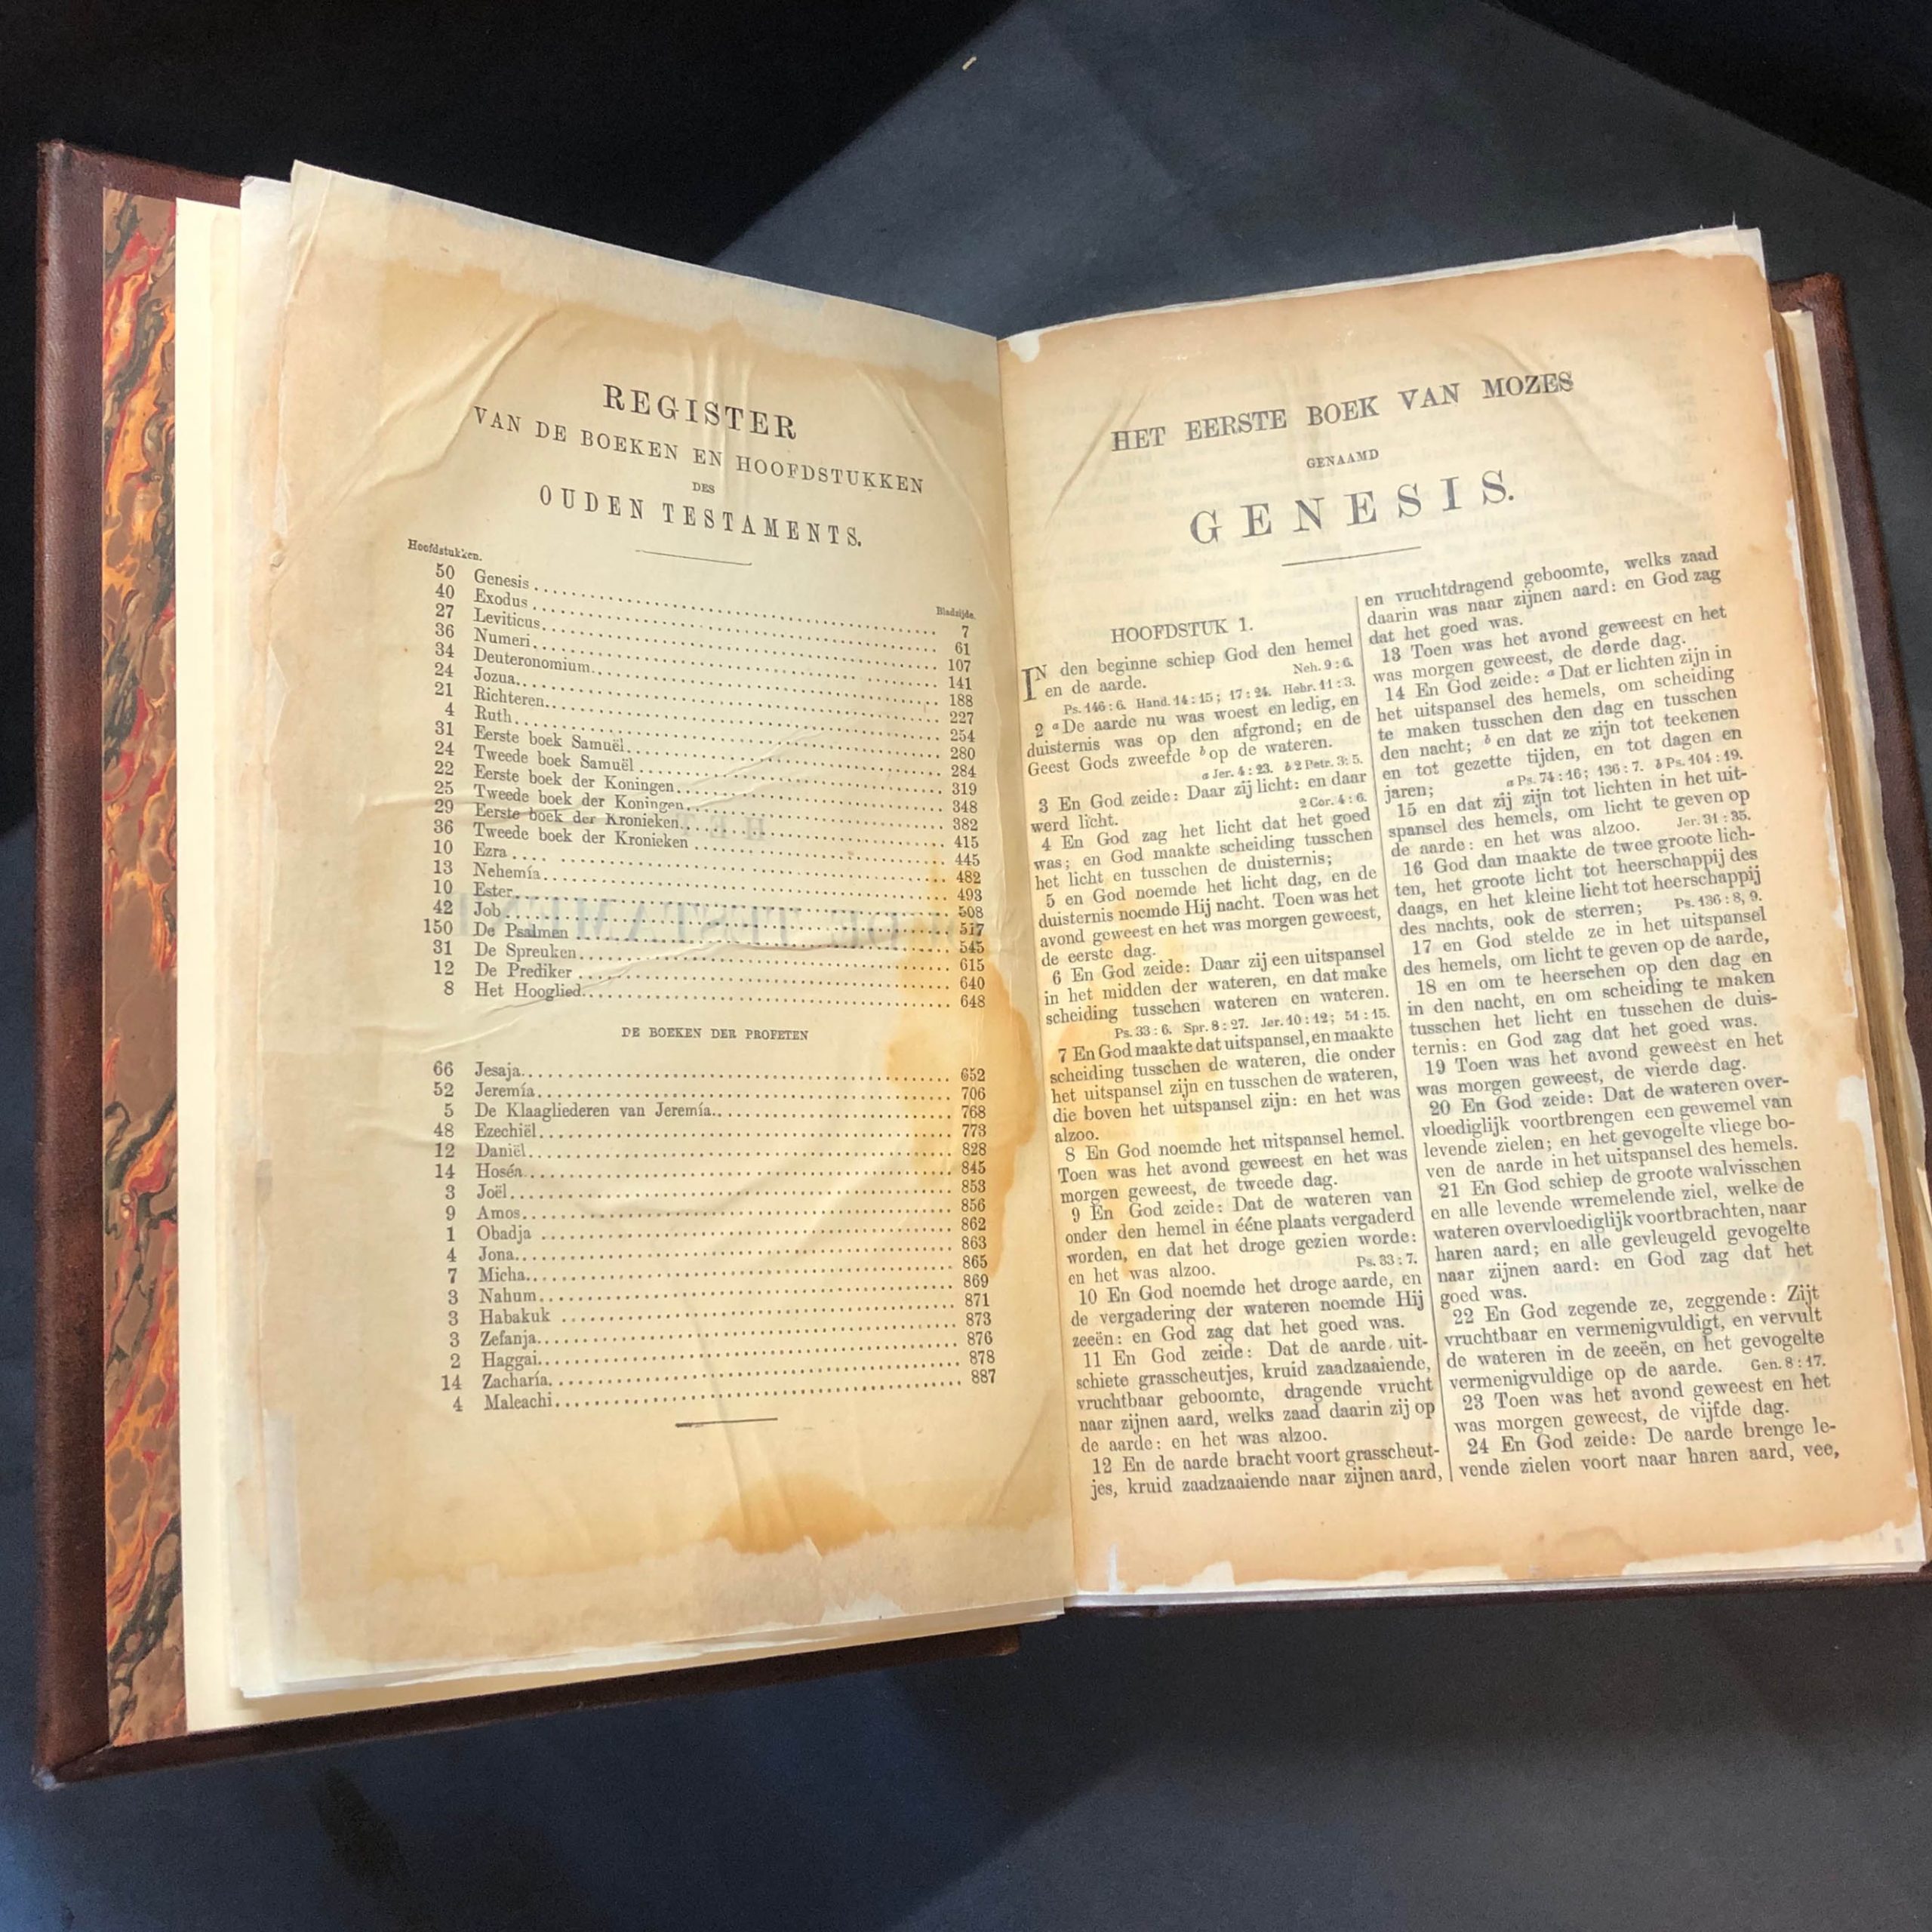 Bijbel Restoration
Custom Leather Bound Book
Boston Harbor Bookbindery
https://bostonharborbooks.com/